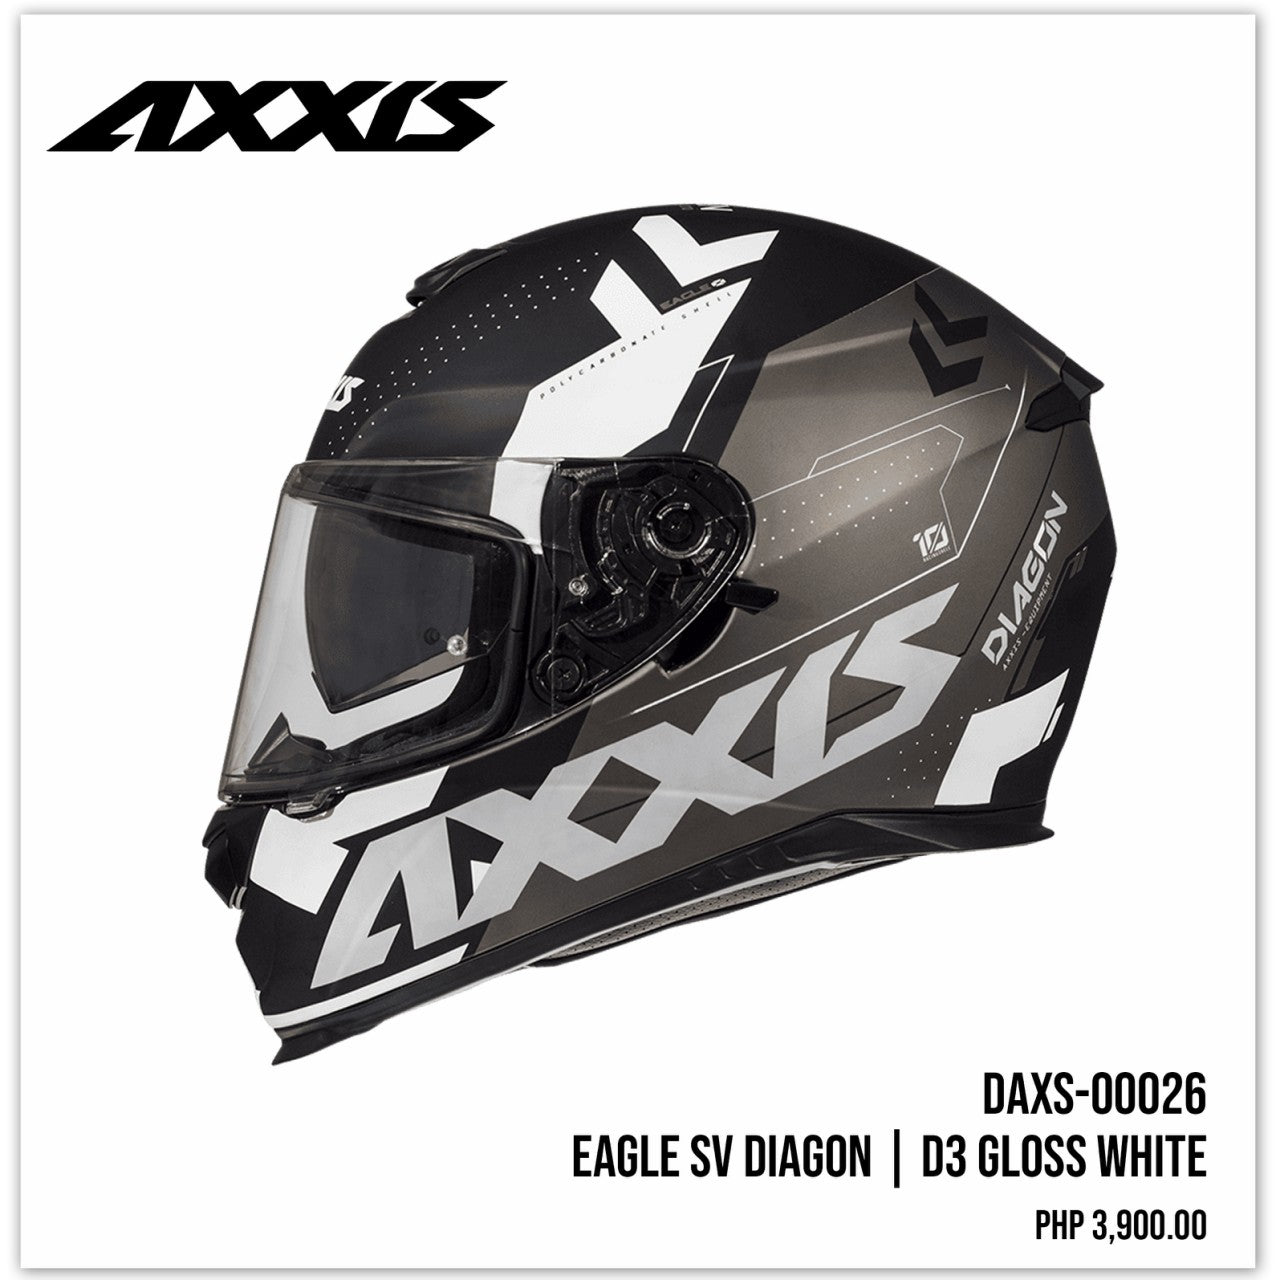 Eagle SV Diagon D3 Gloss White